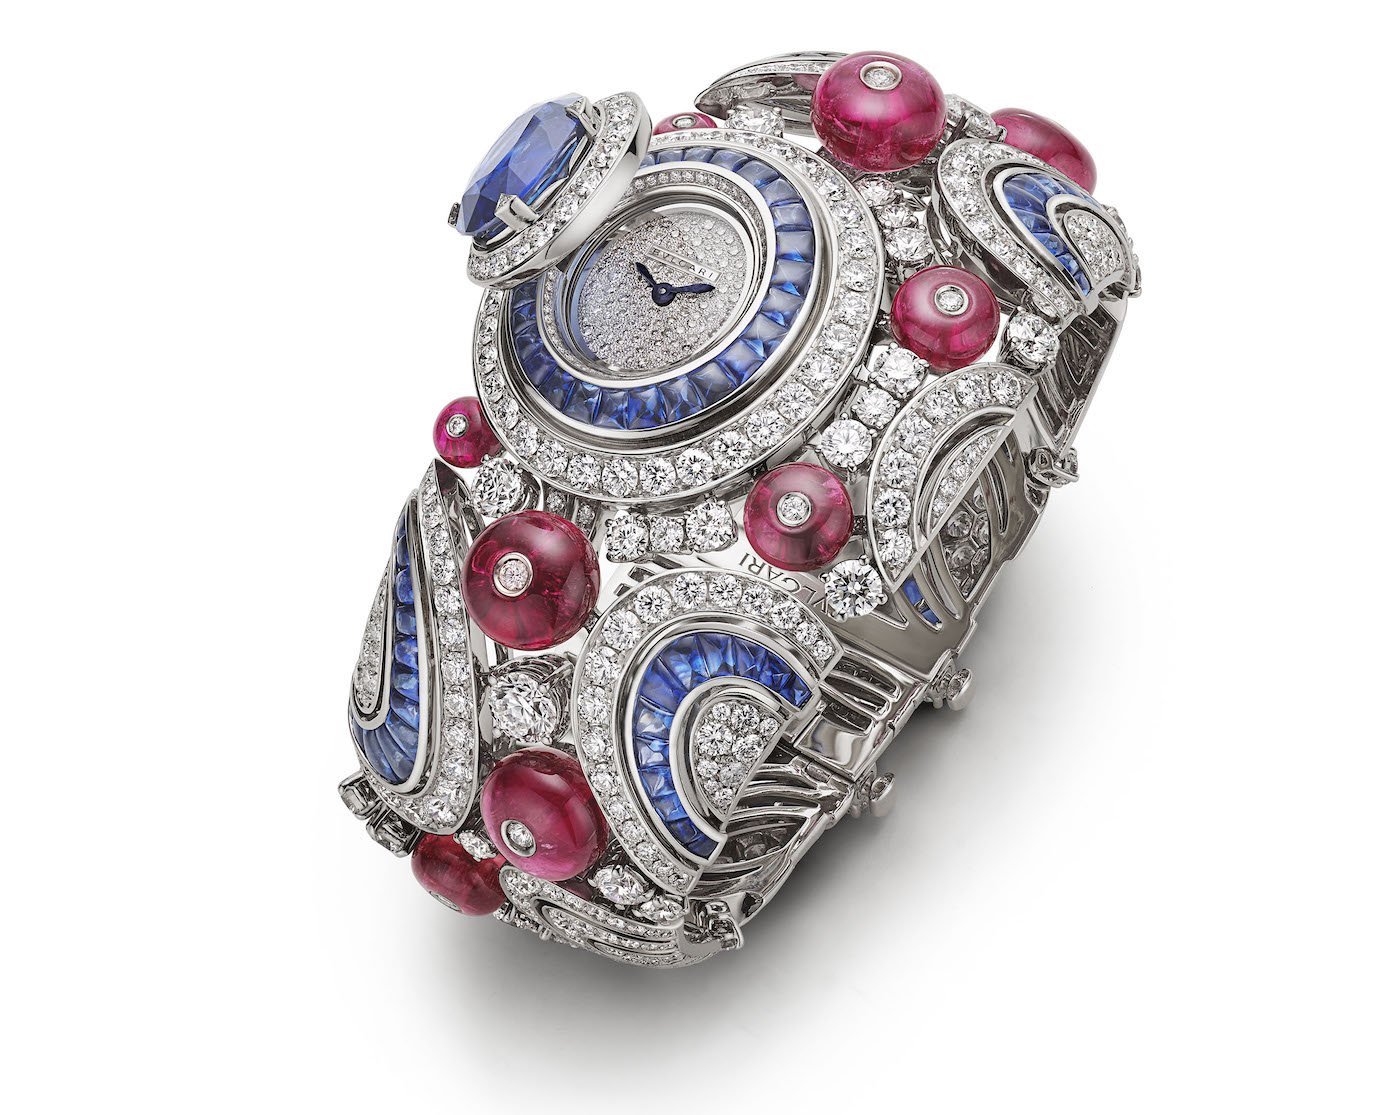 Magnifica: Bulgari unveils its most precious timepiece ever